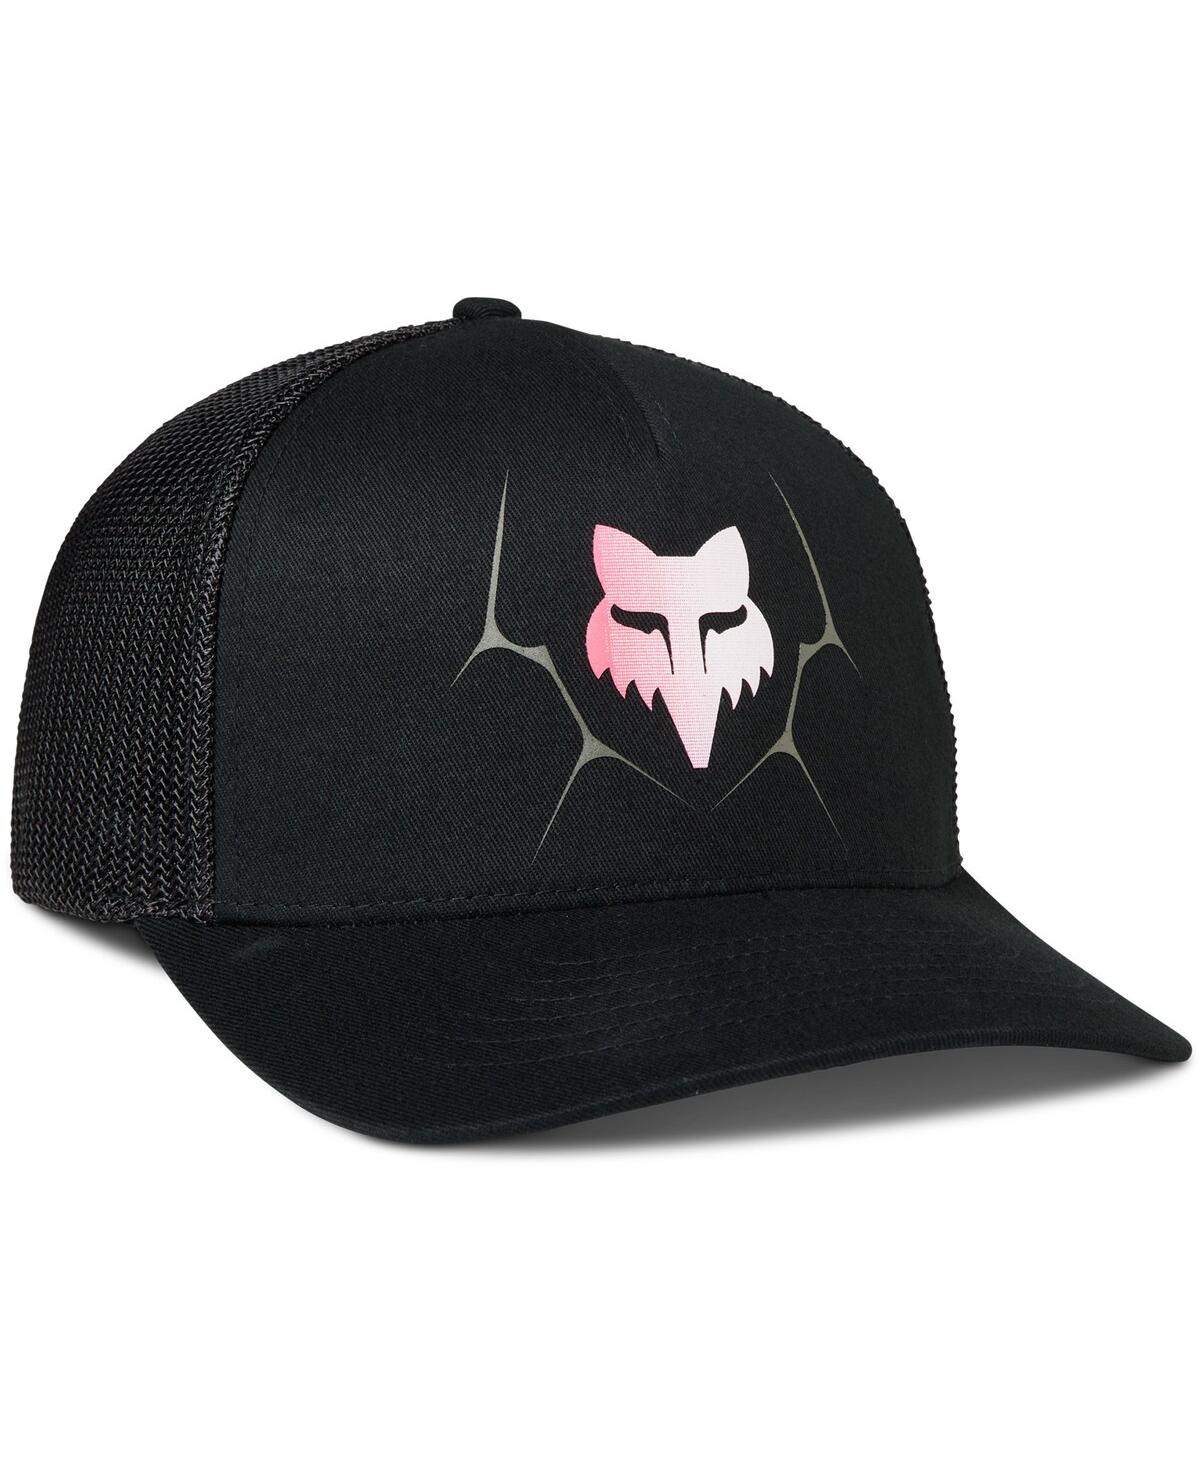 Fox Men's  Black Syz Flexfit Flex Hat